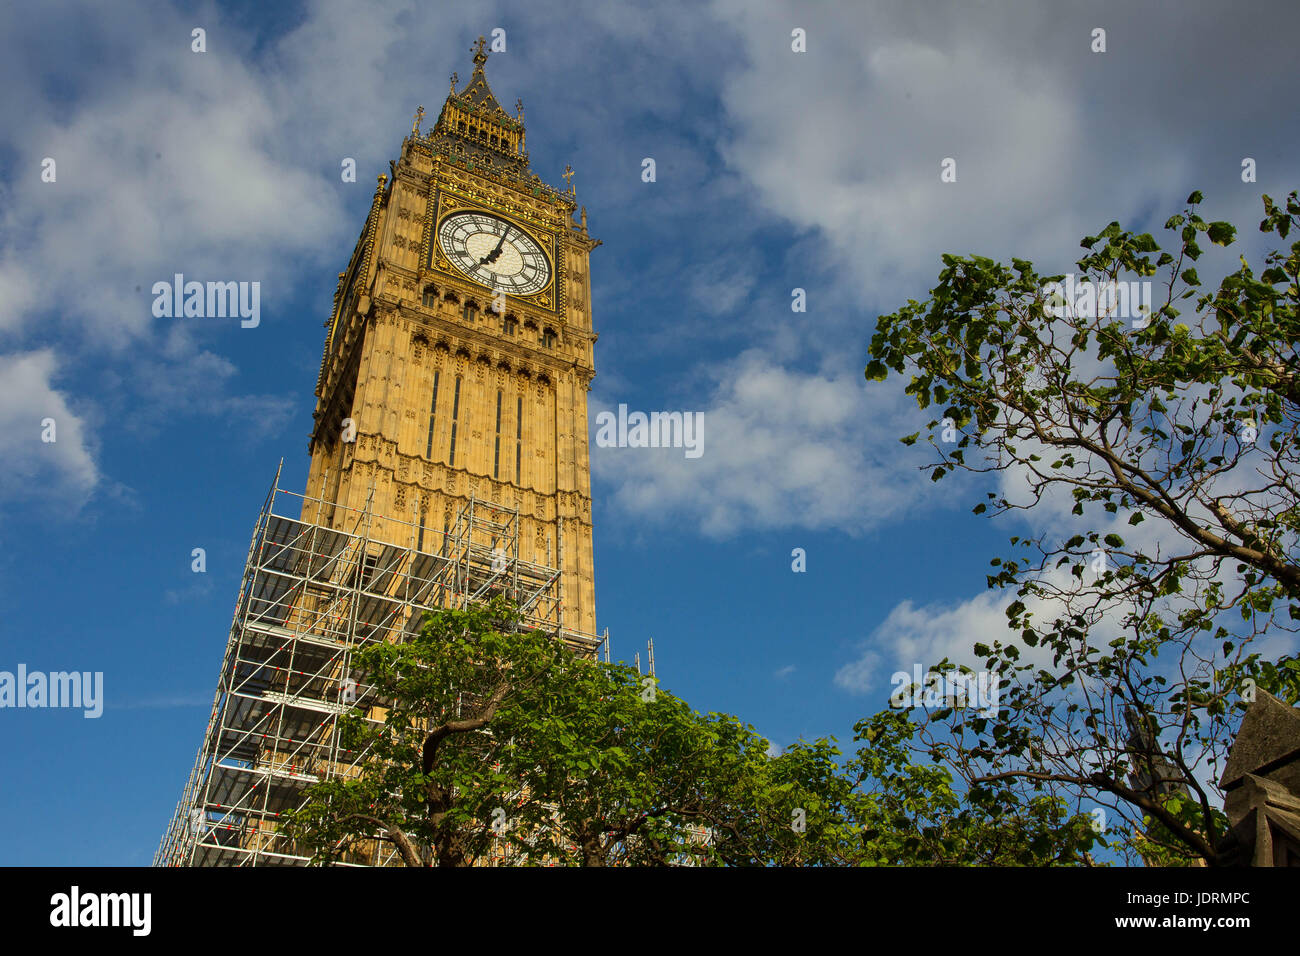 Gerüstbau wurde um den Elizabeth Turm beherbergt die Glocke Big Ben am Palace of Westminster errichtet. Stockfoto